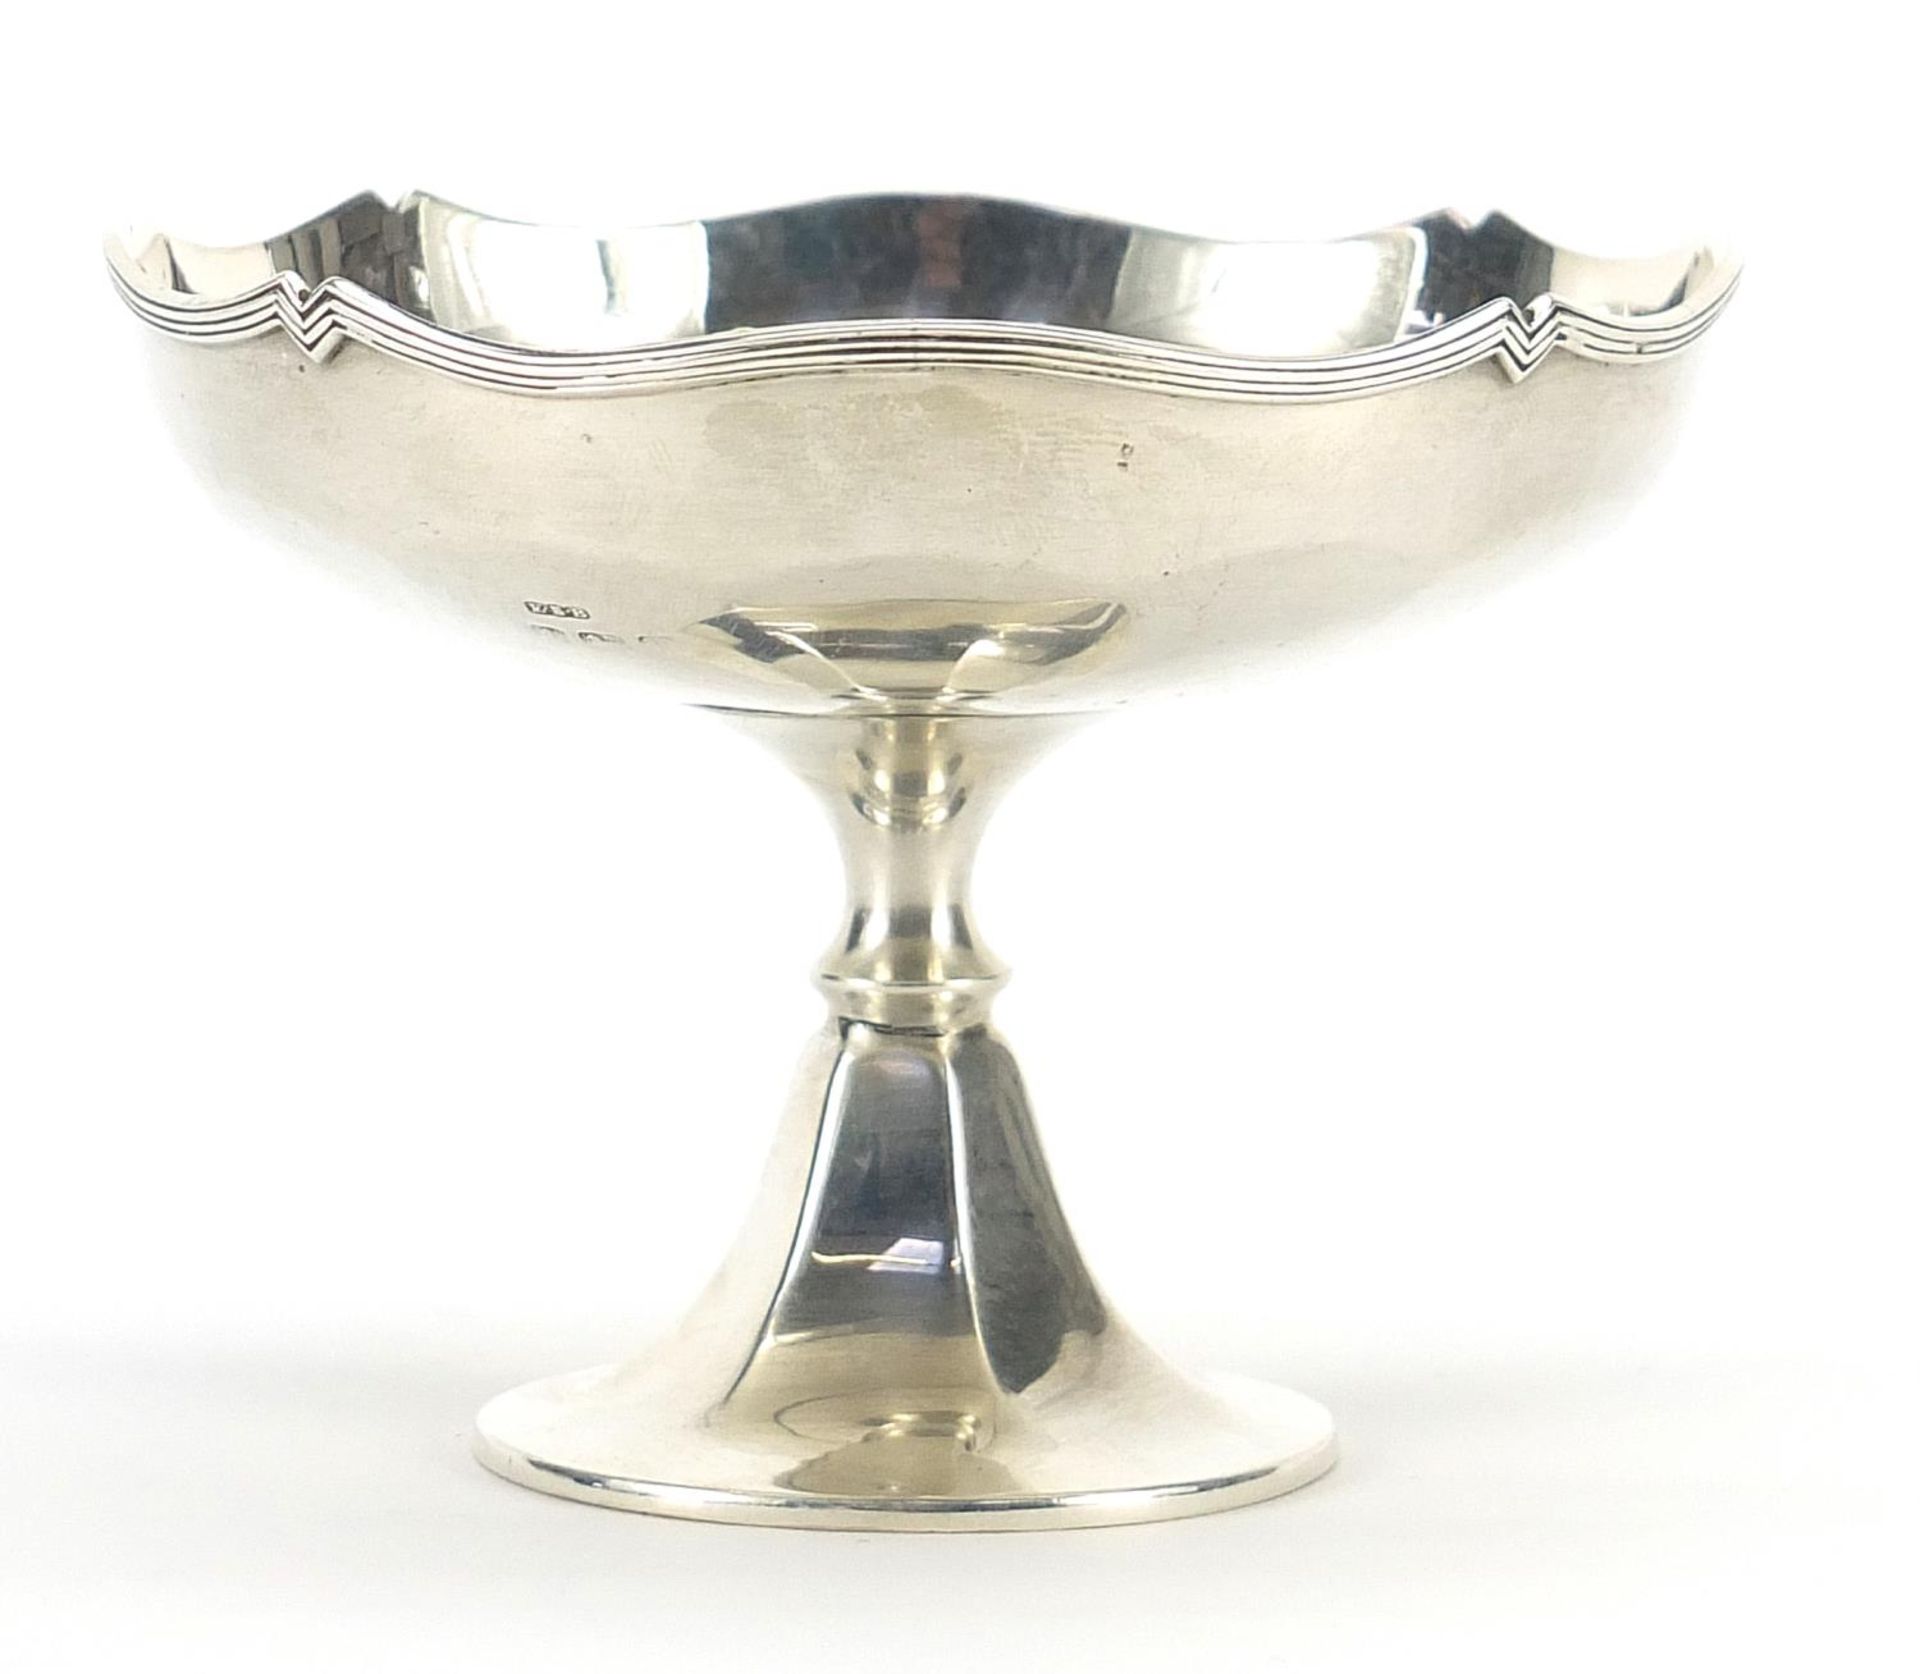 Edward Souter Barnsley & Co, silver pedestal dish, indistinct date letter, 8cm high x 10.5cm in